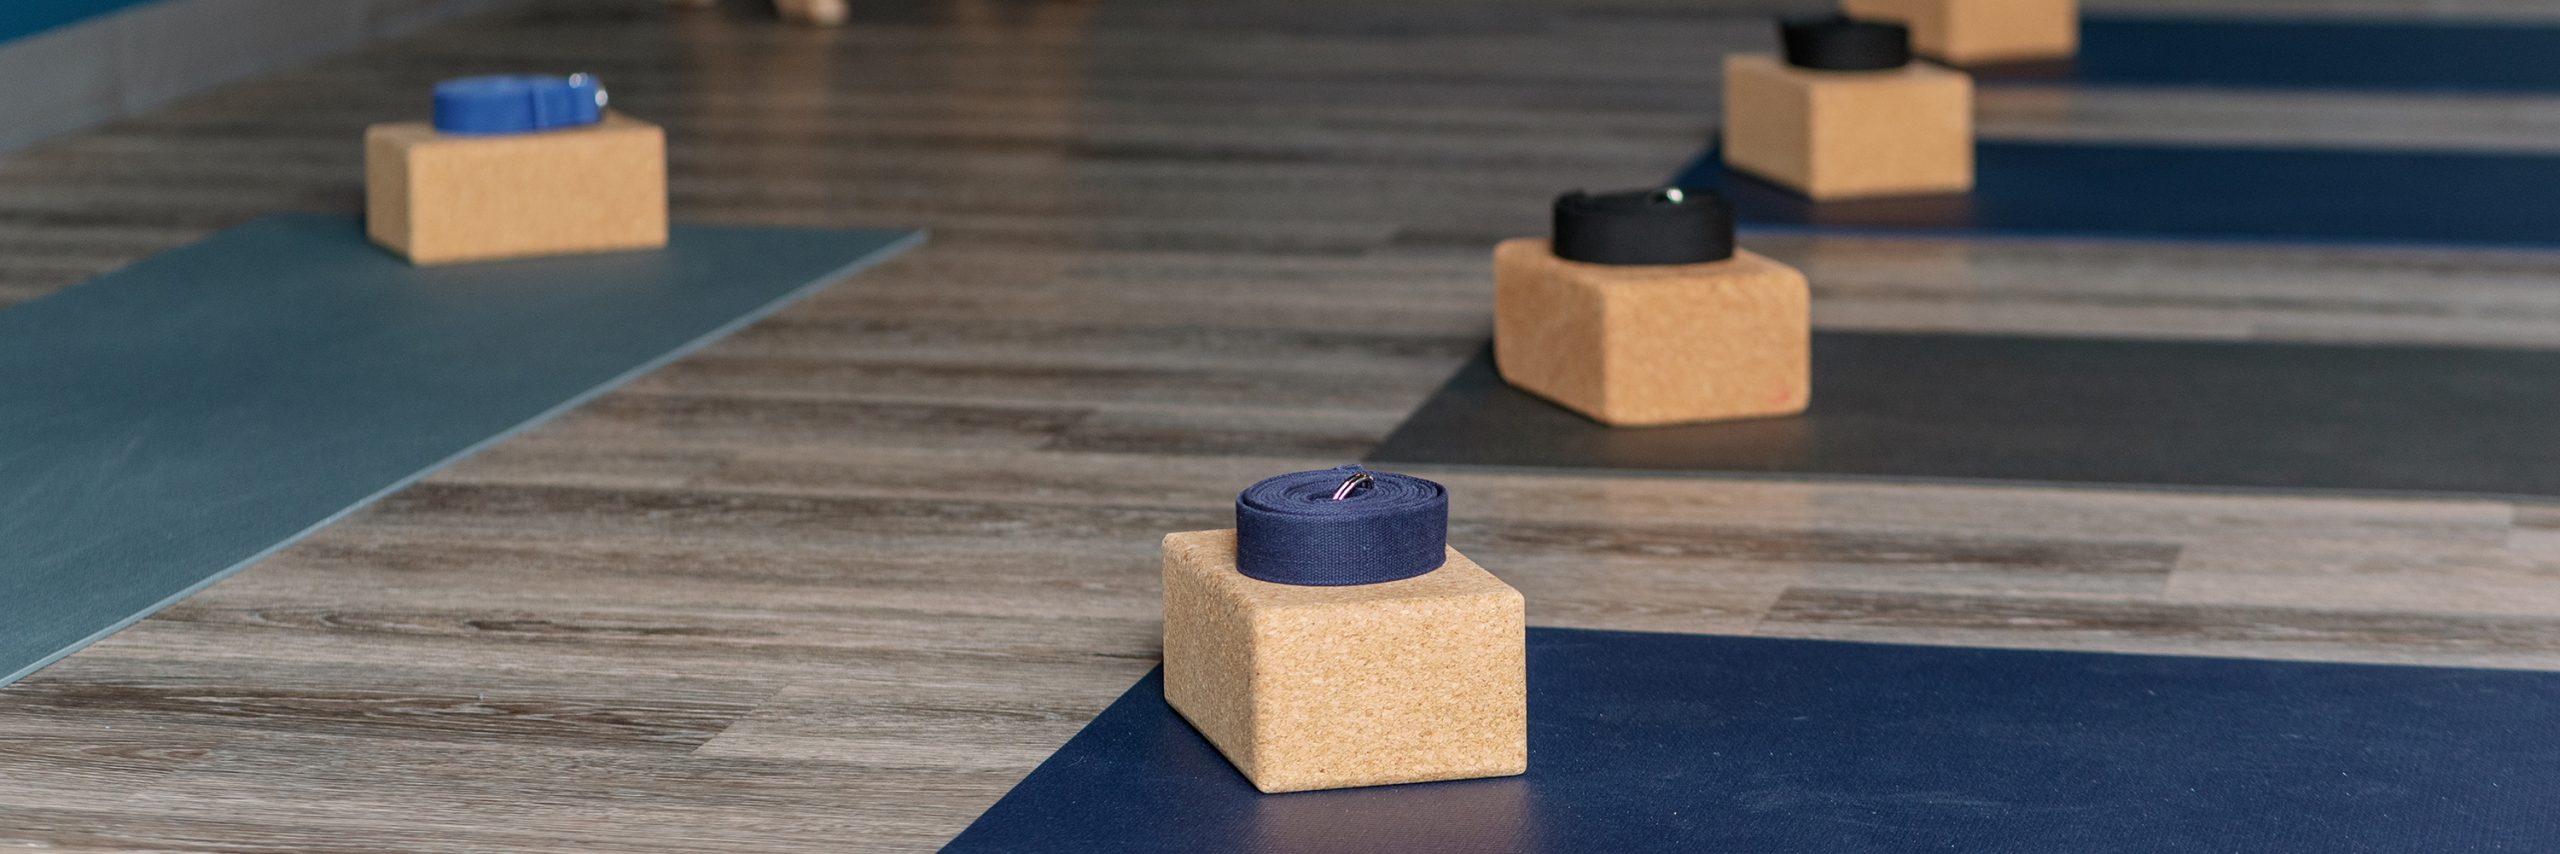 yoga mats and blocks